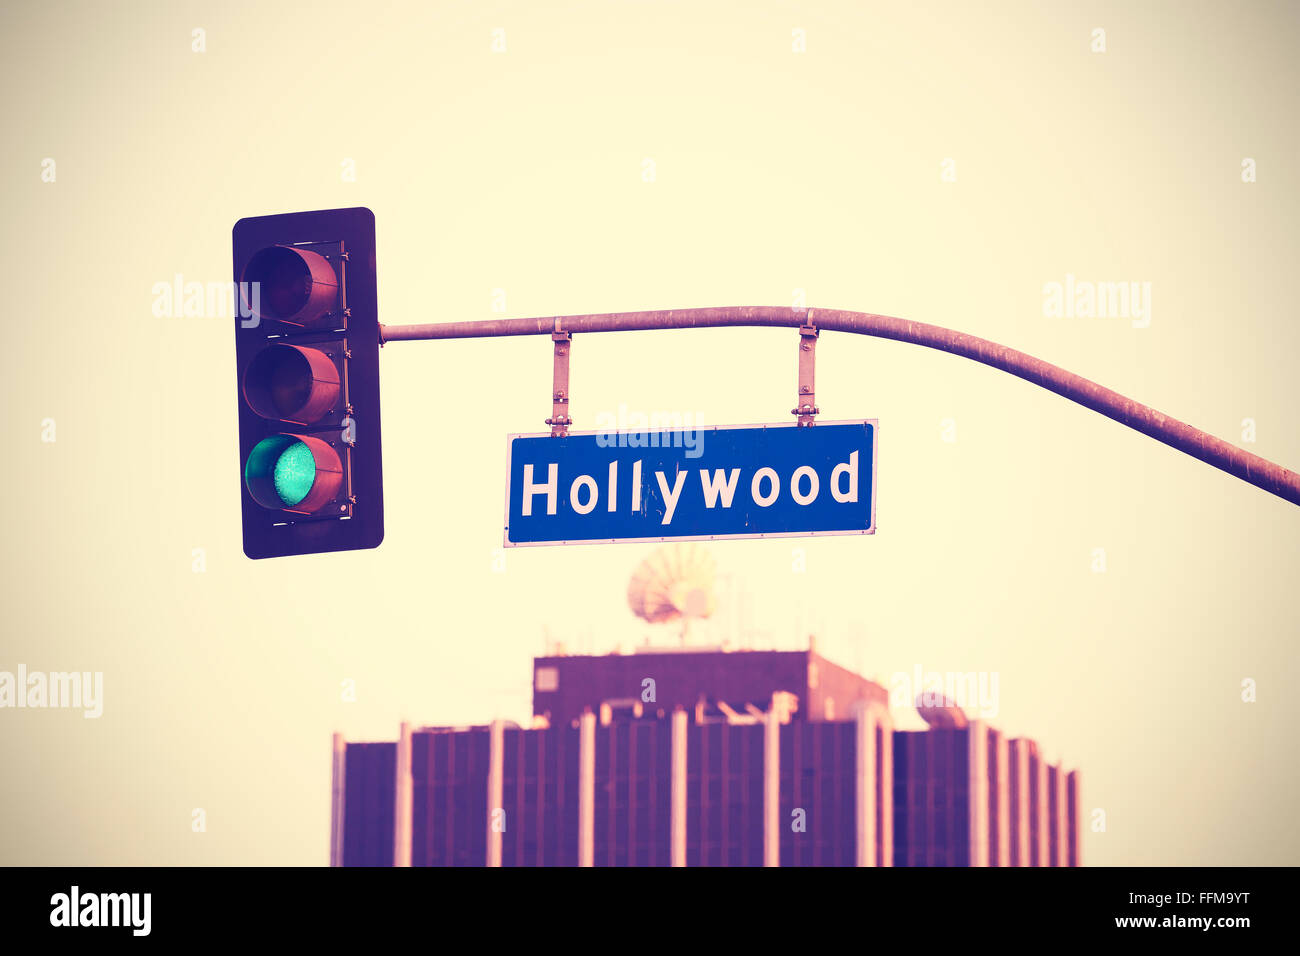 Vintage getönten Hollywood Straßenschild und Ampeln, Los Angeles, USA. Stockfoto